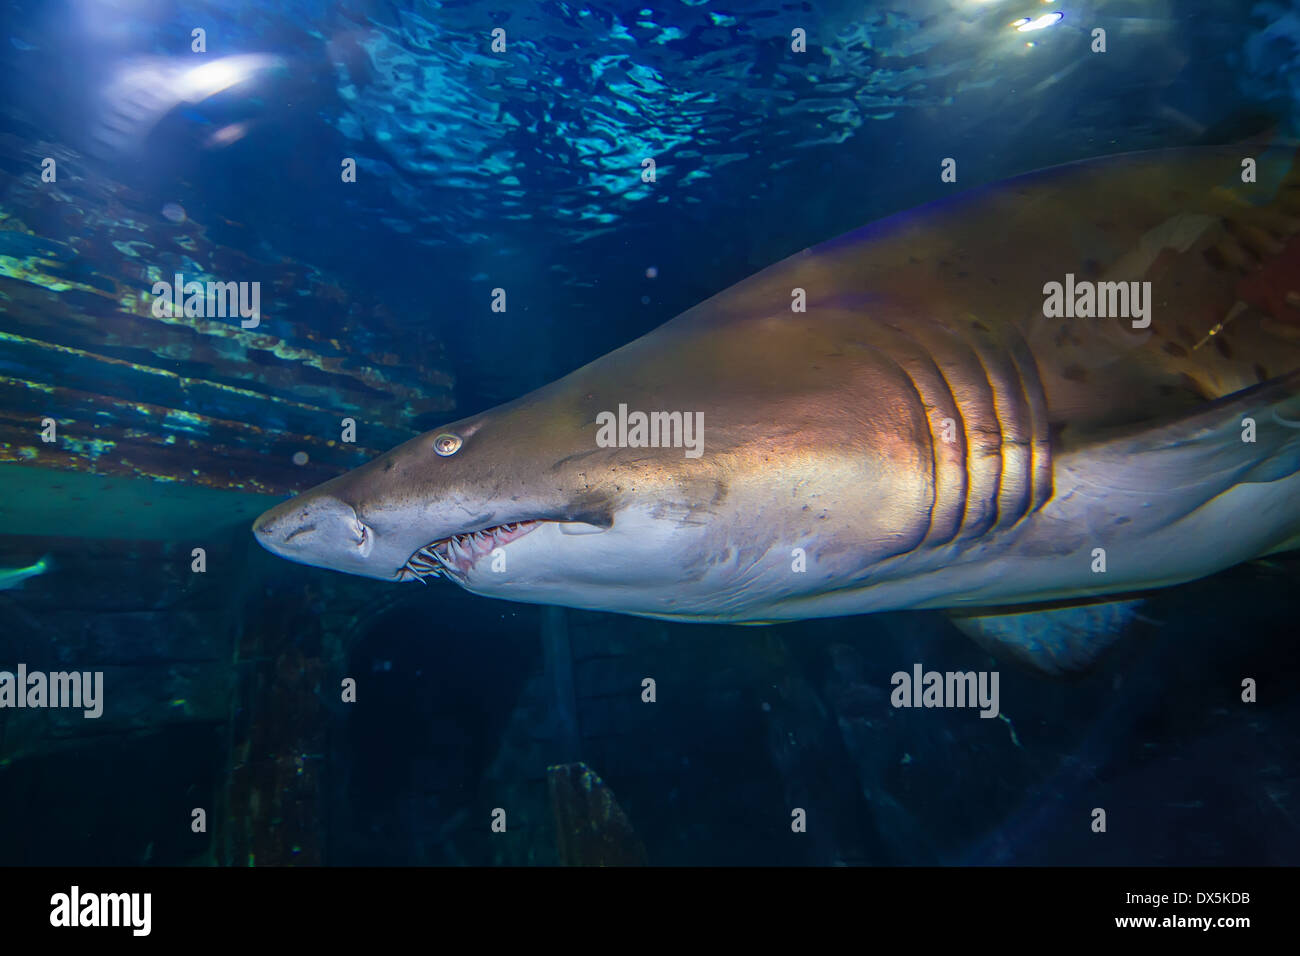 Tiger sand shark in turkuazoo aquarium in Istanbul. Shark with big jaws in ocean. Stock Photo